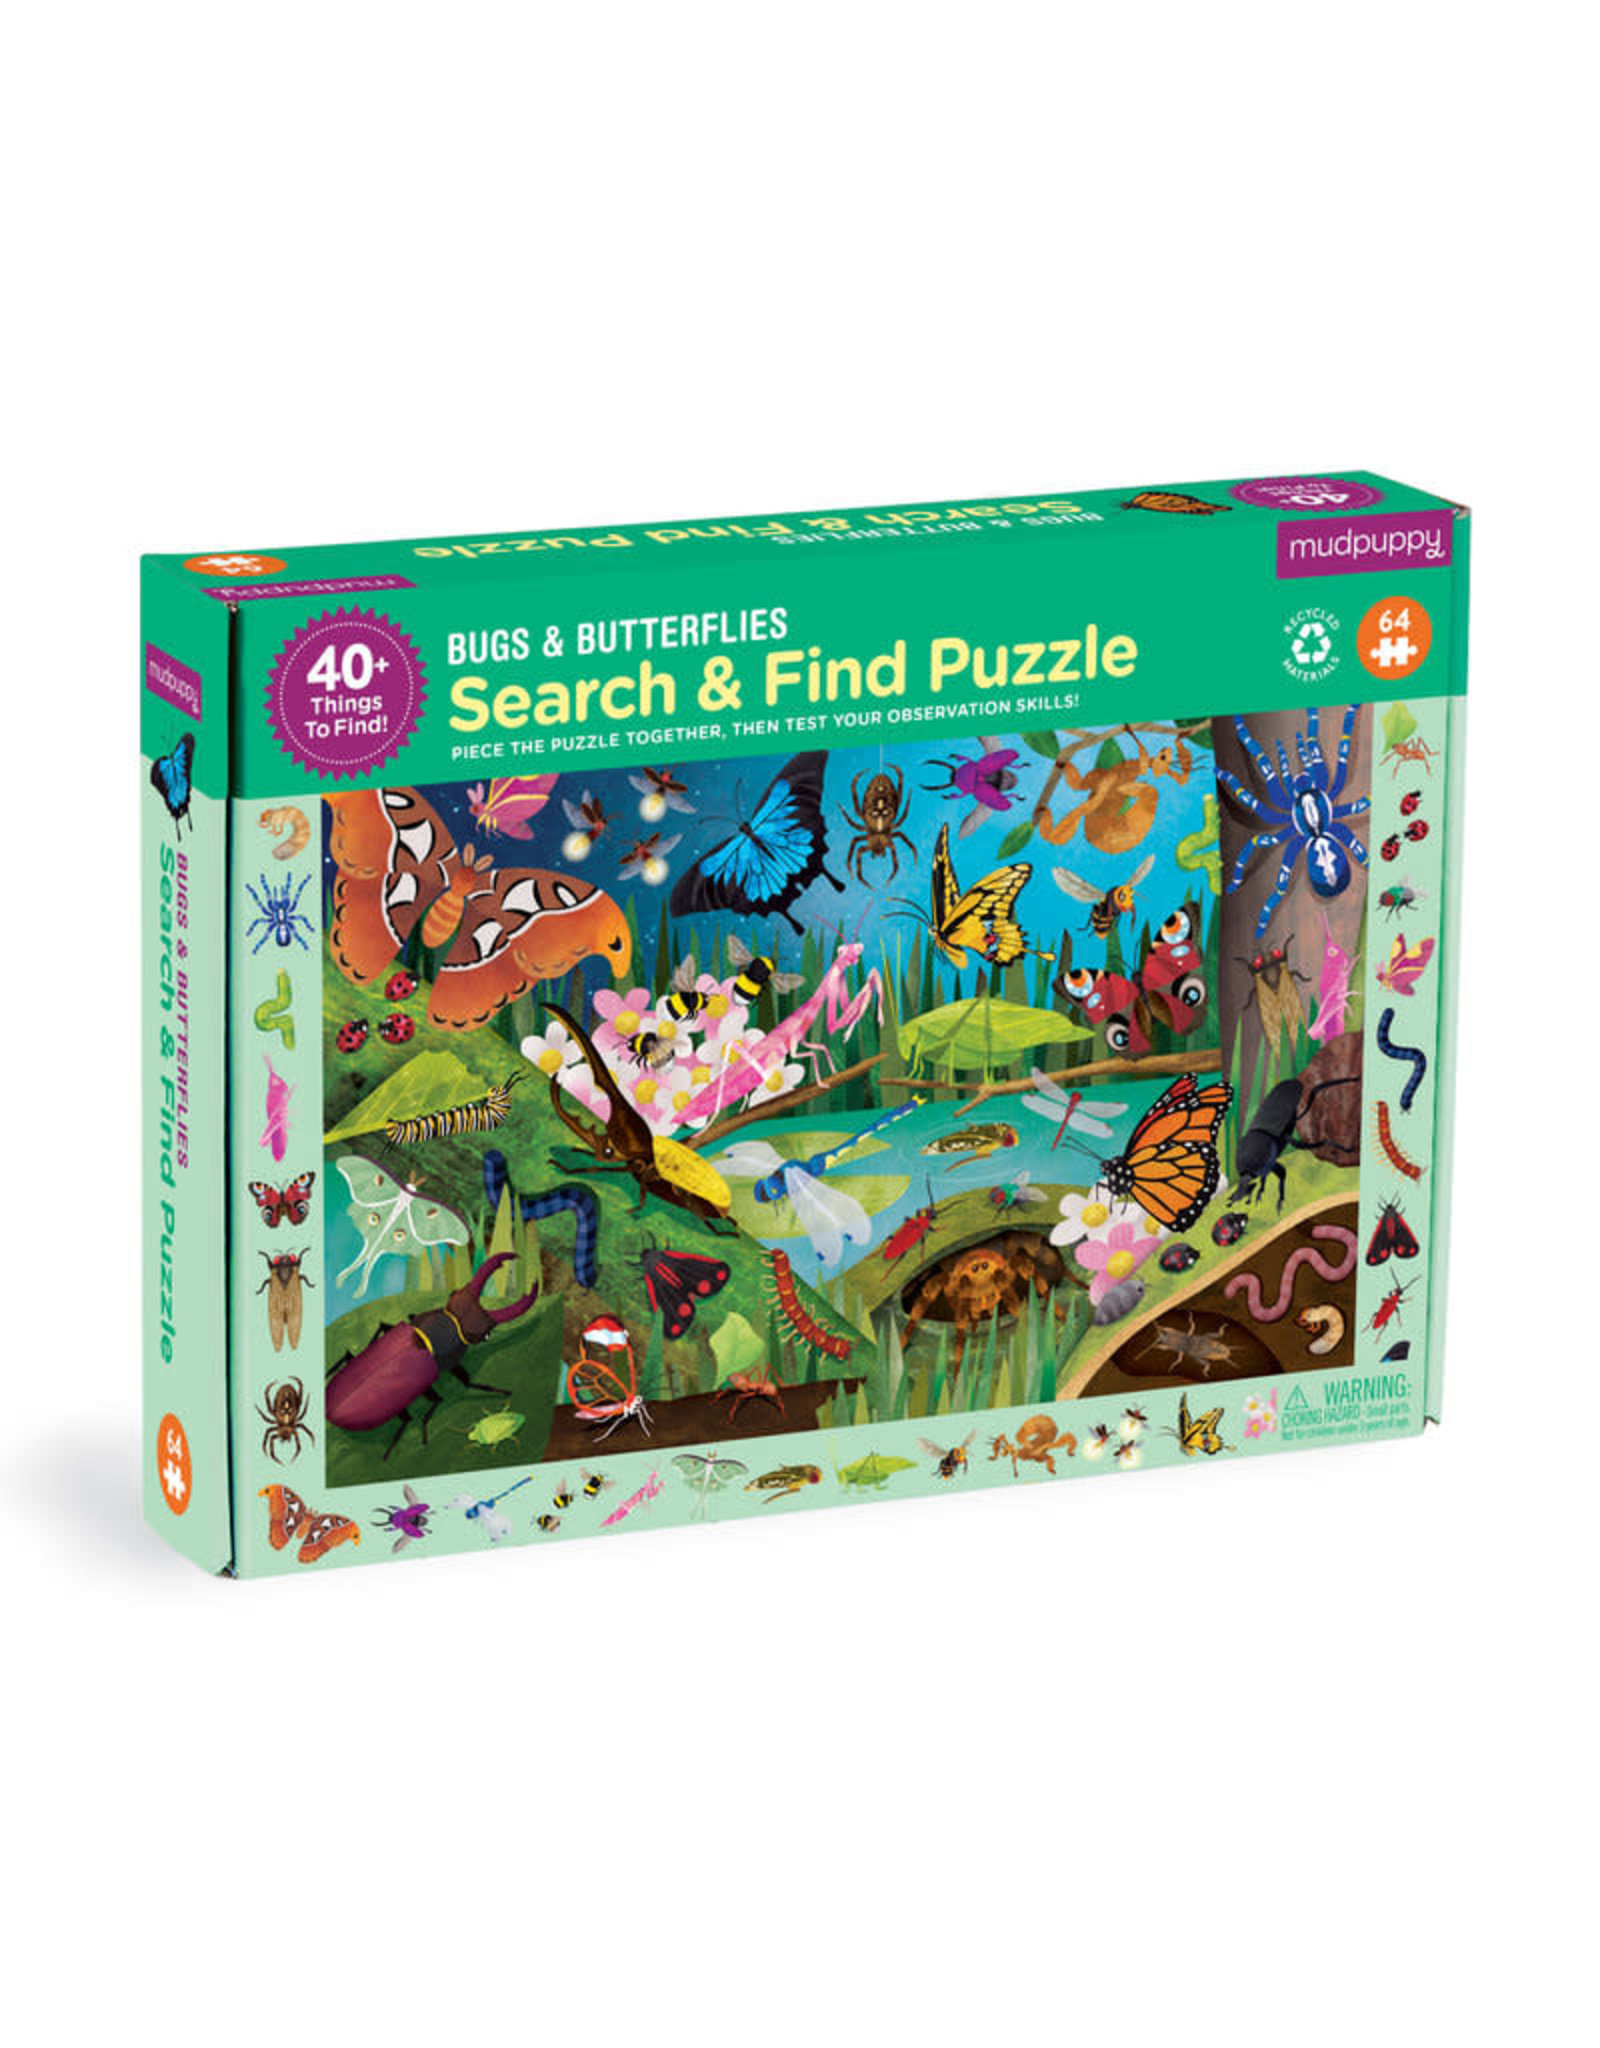 Mudpuppy Bugs & Butterflies 64 Piece Search & Find Puzzle